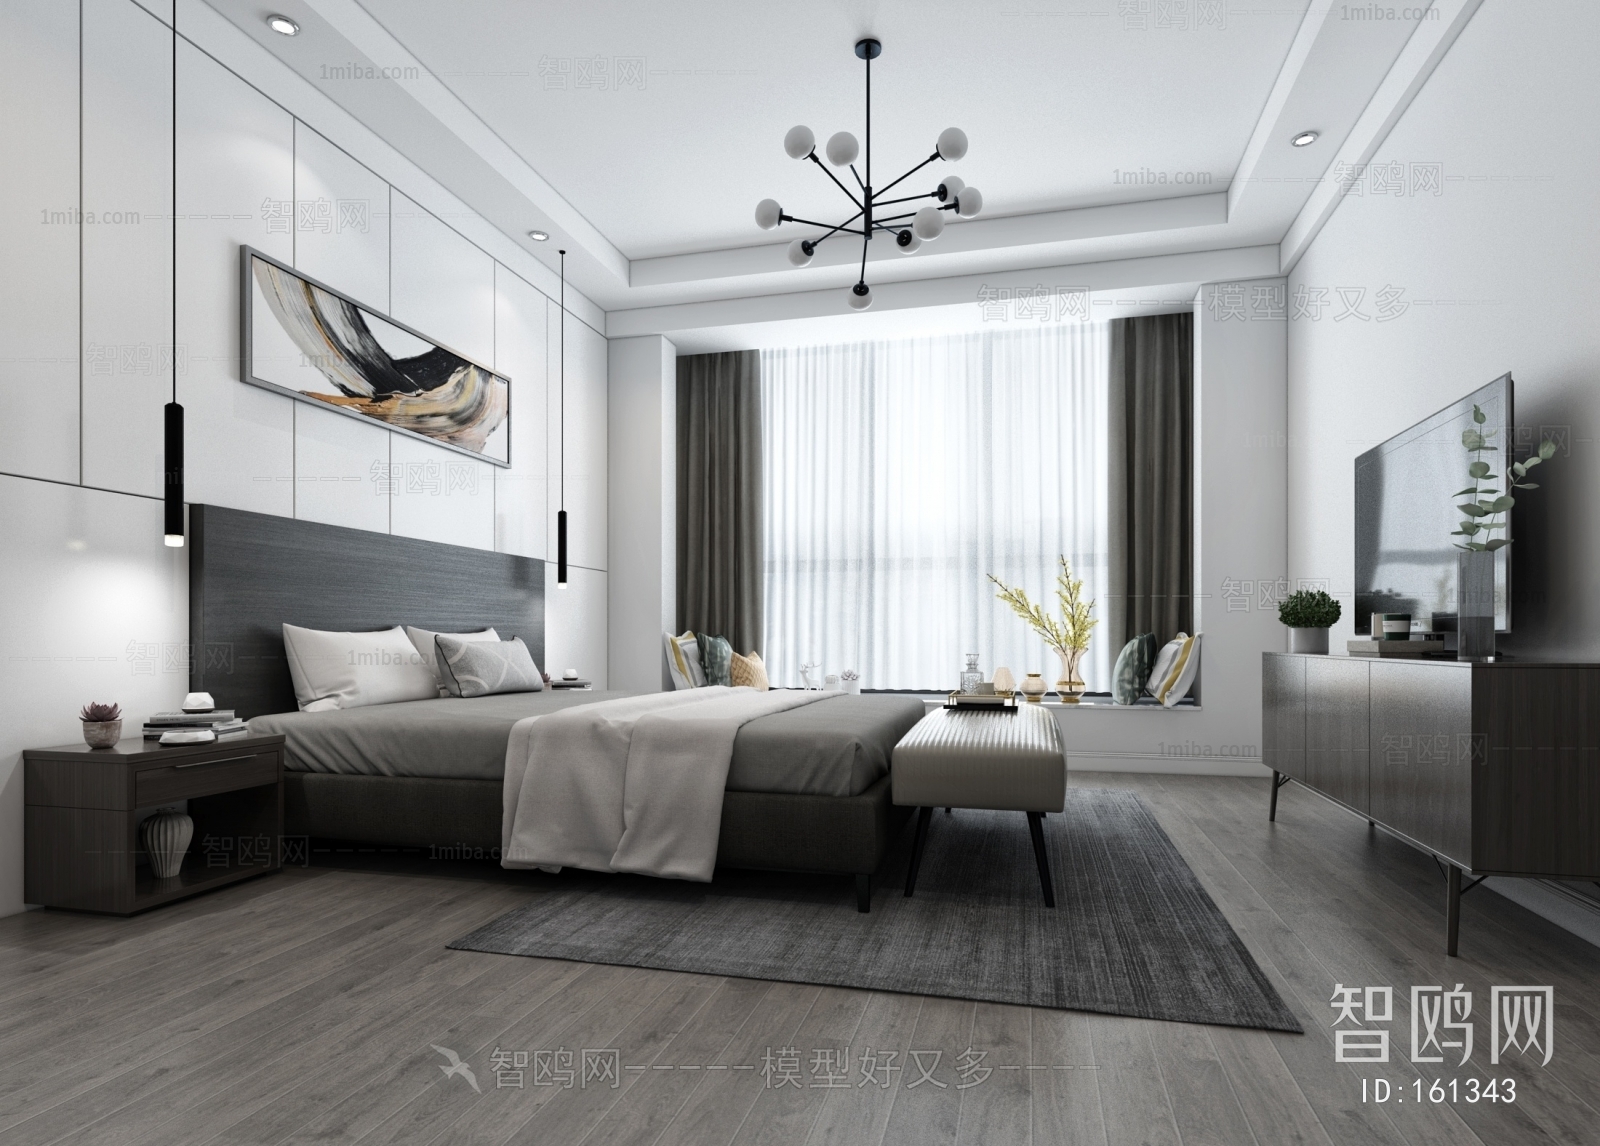 Simple Style Bedroom